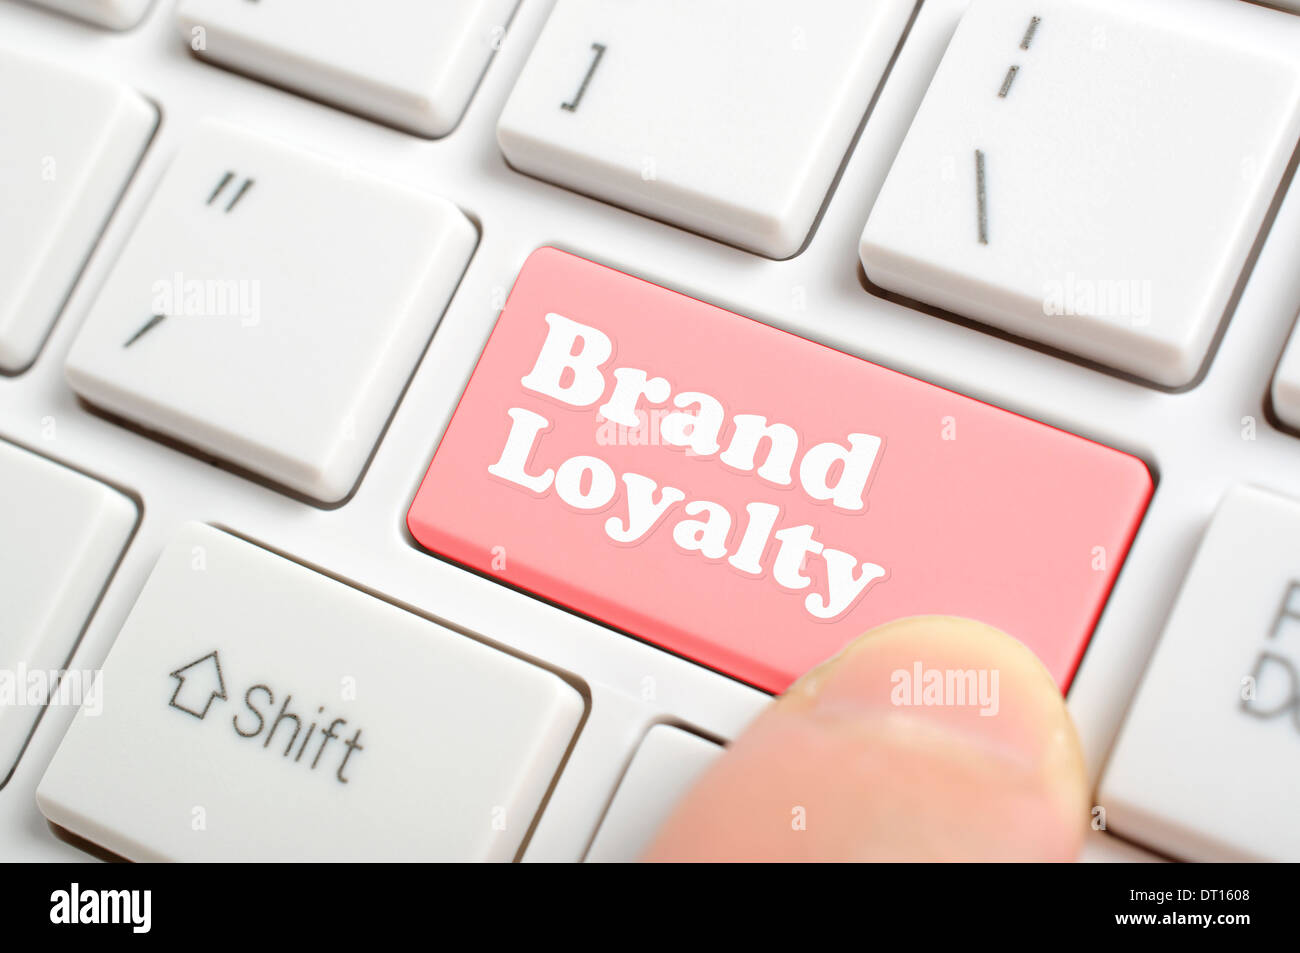 Marke Loyalität Taste auf der Tastatur Stockfoto